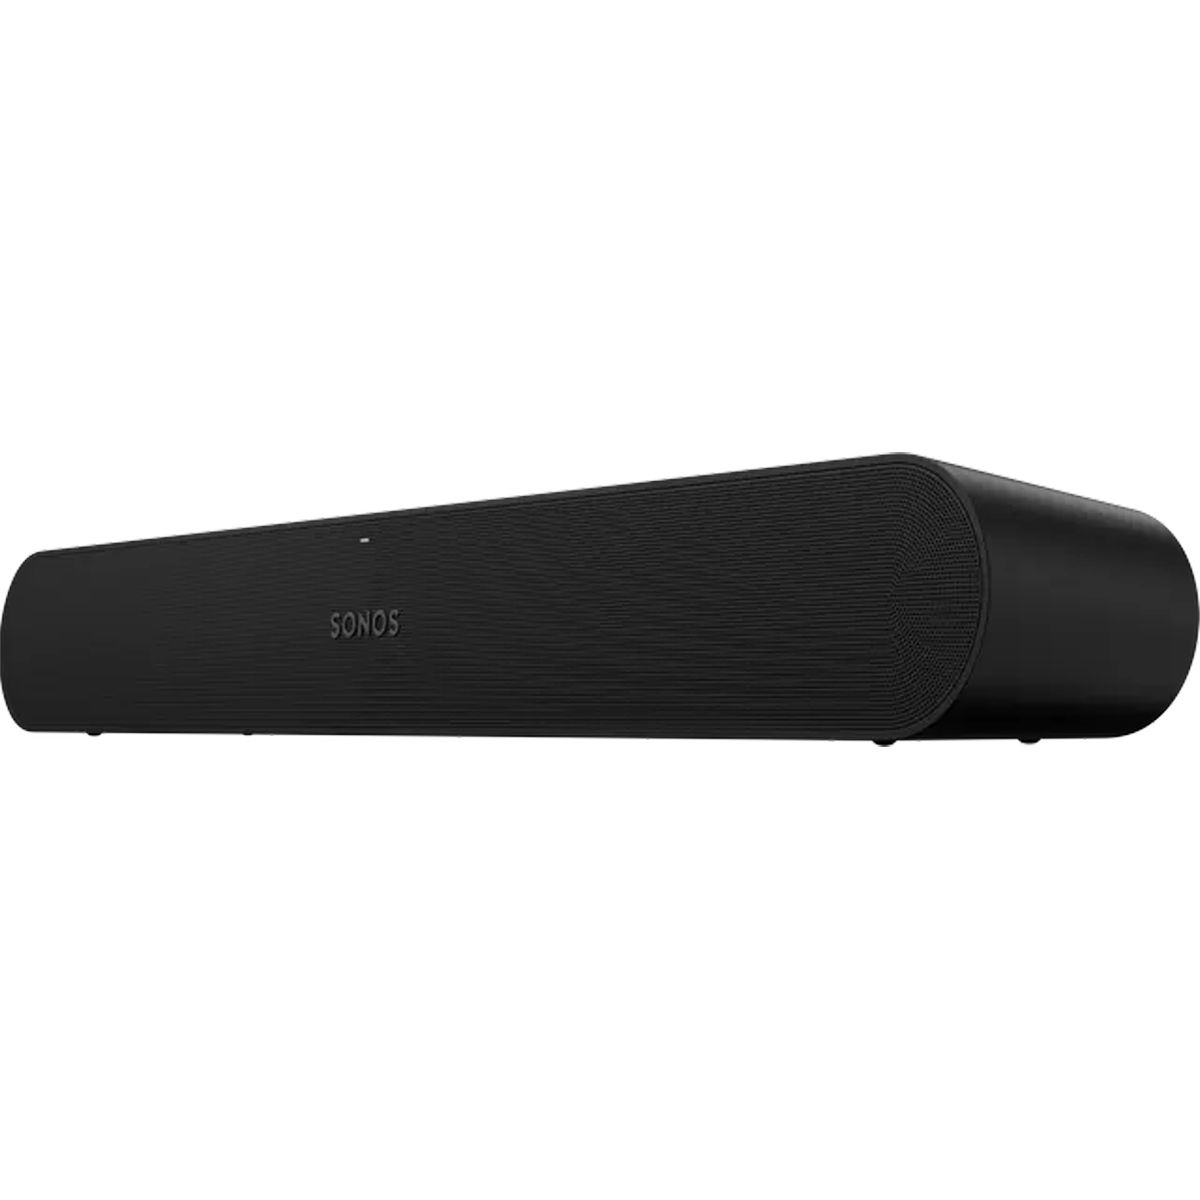 Sonos Ray Compact Soundbar - Black - angled right side view